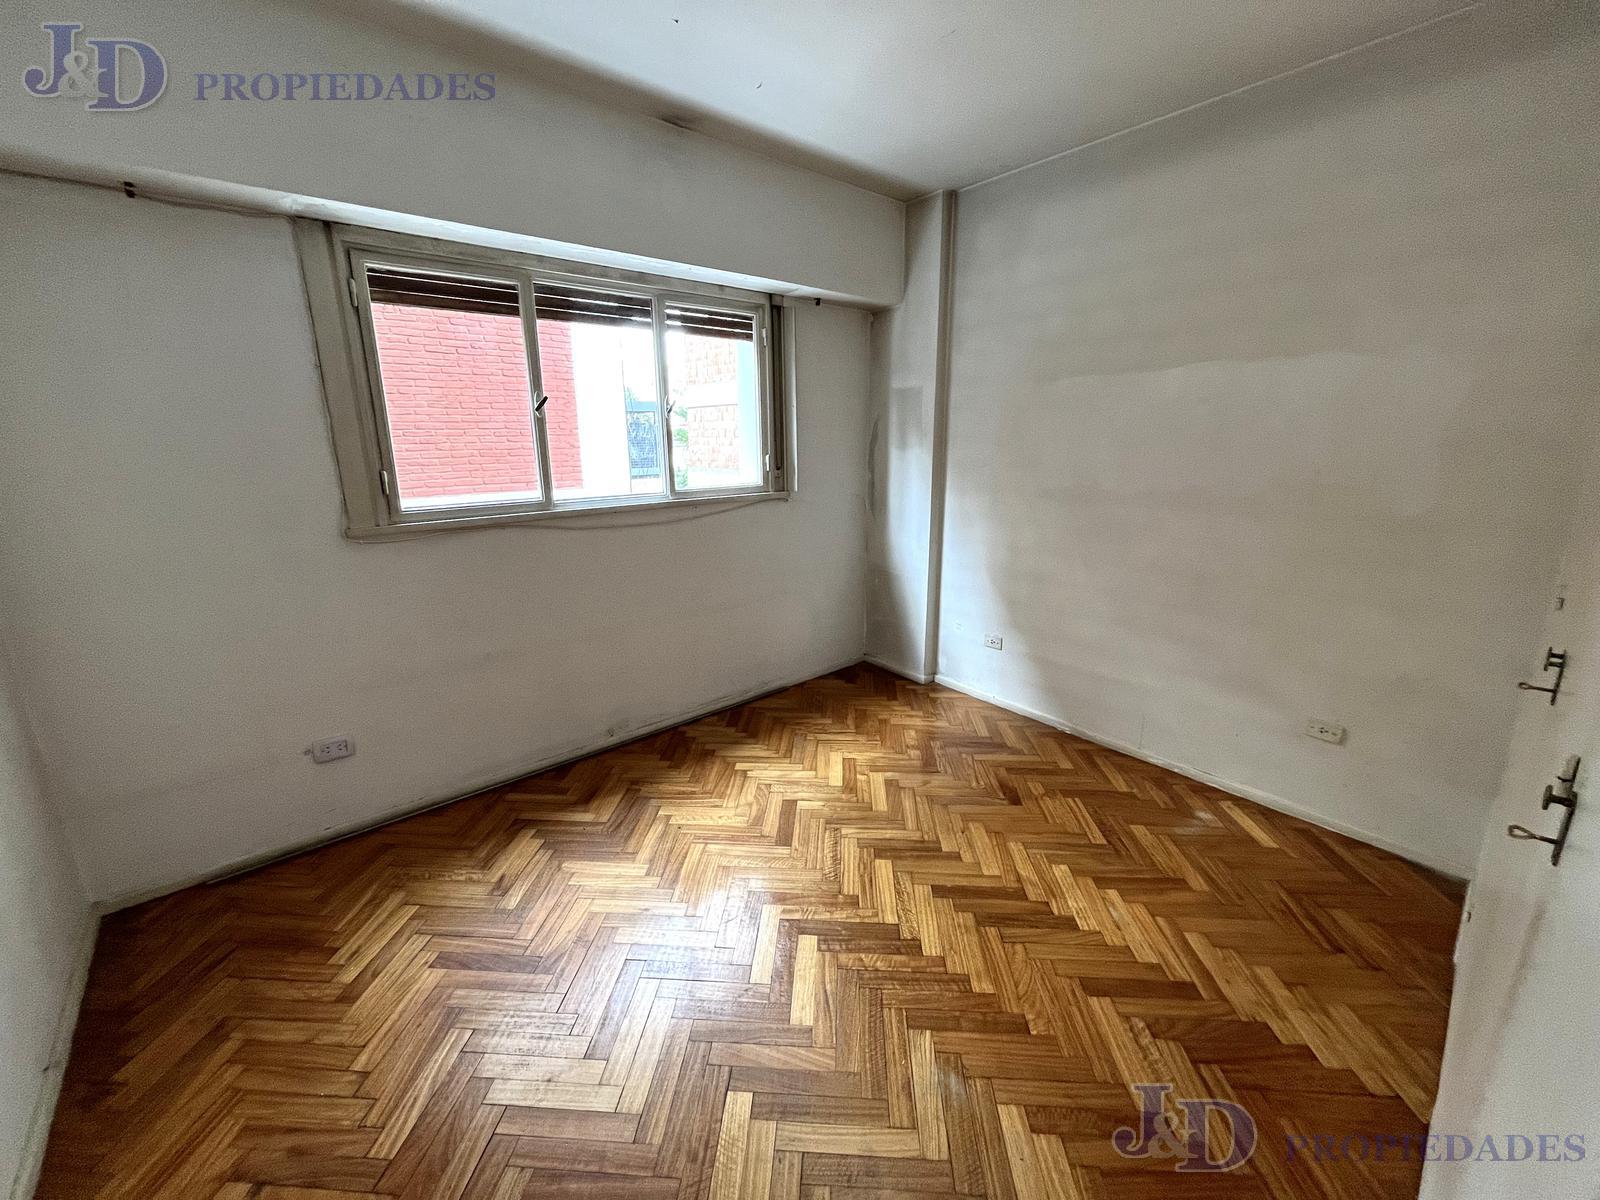 #5172616 | Rental | Apartment | Belgrano (JD propiedades)